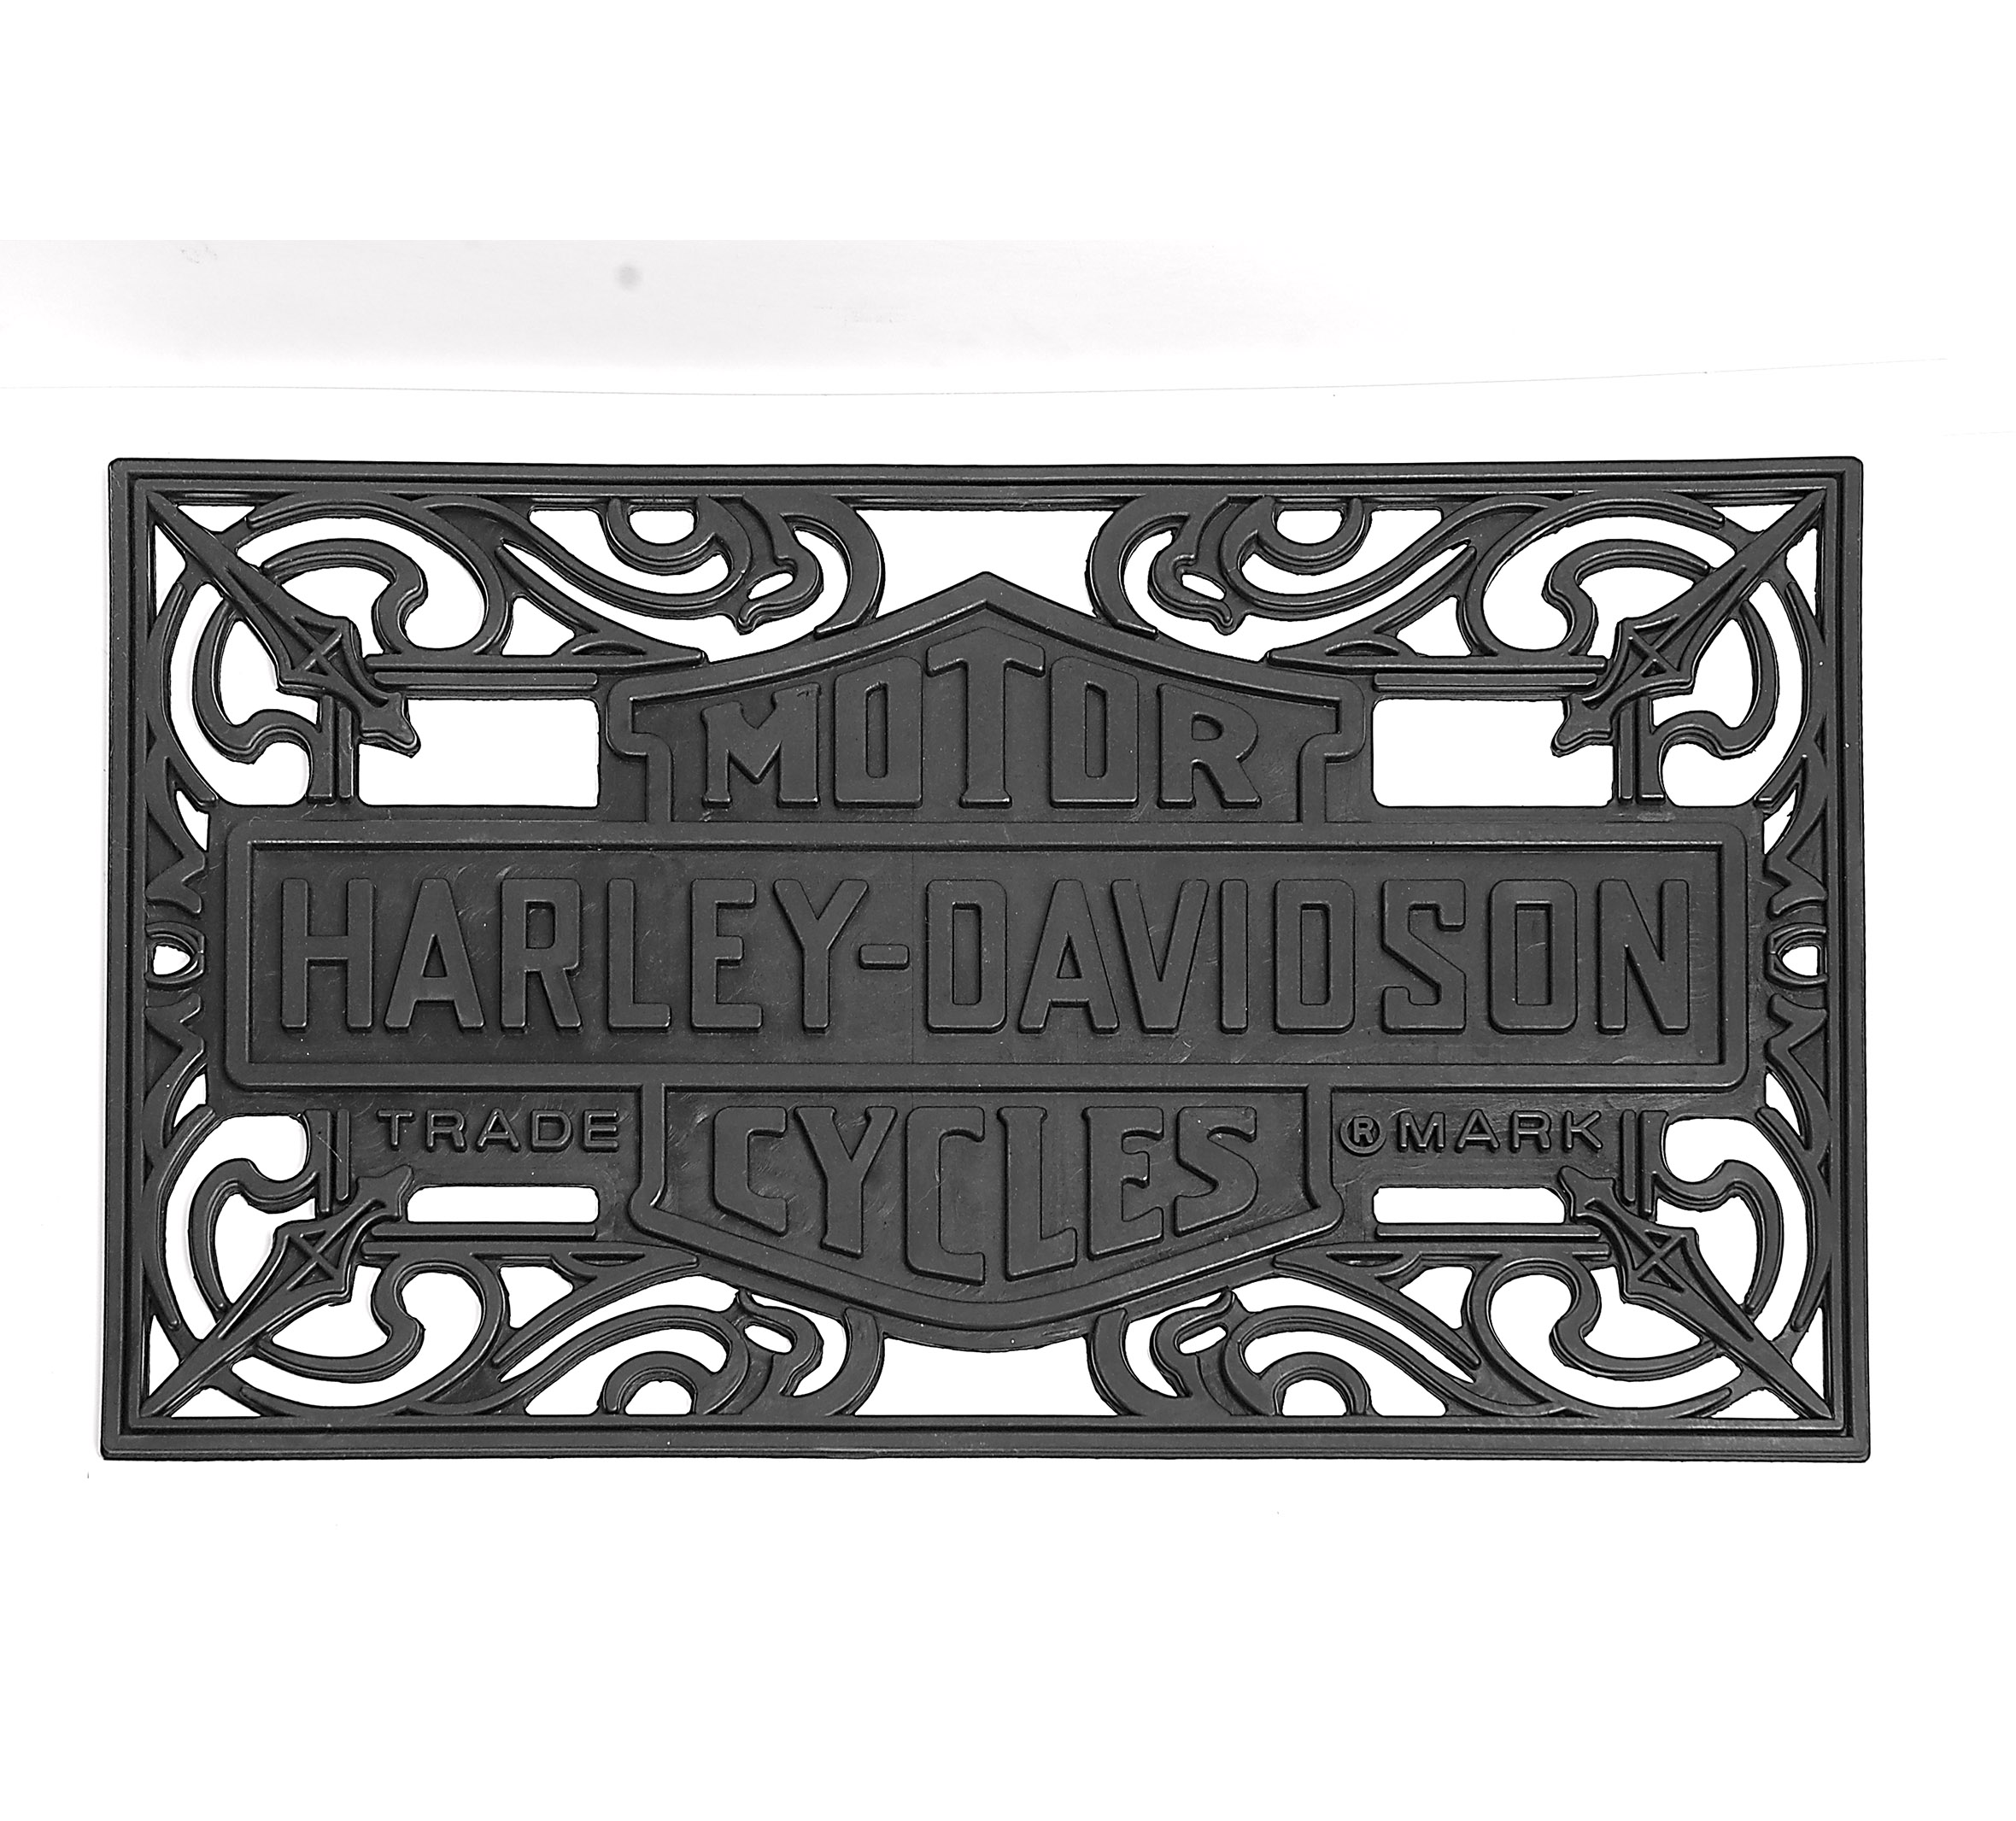 https://www.harley-davidson.com/content/dam/h-d/images/product-images/merchandise/licensed-product/2020/winter-2020/99326-21vx/99326-21VX_F.jpg